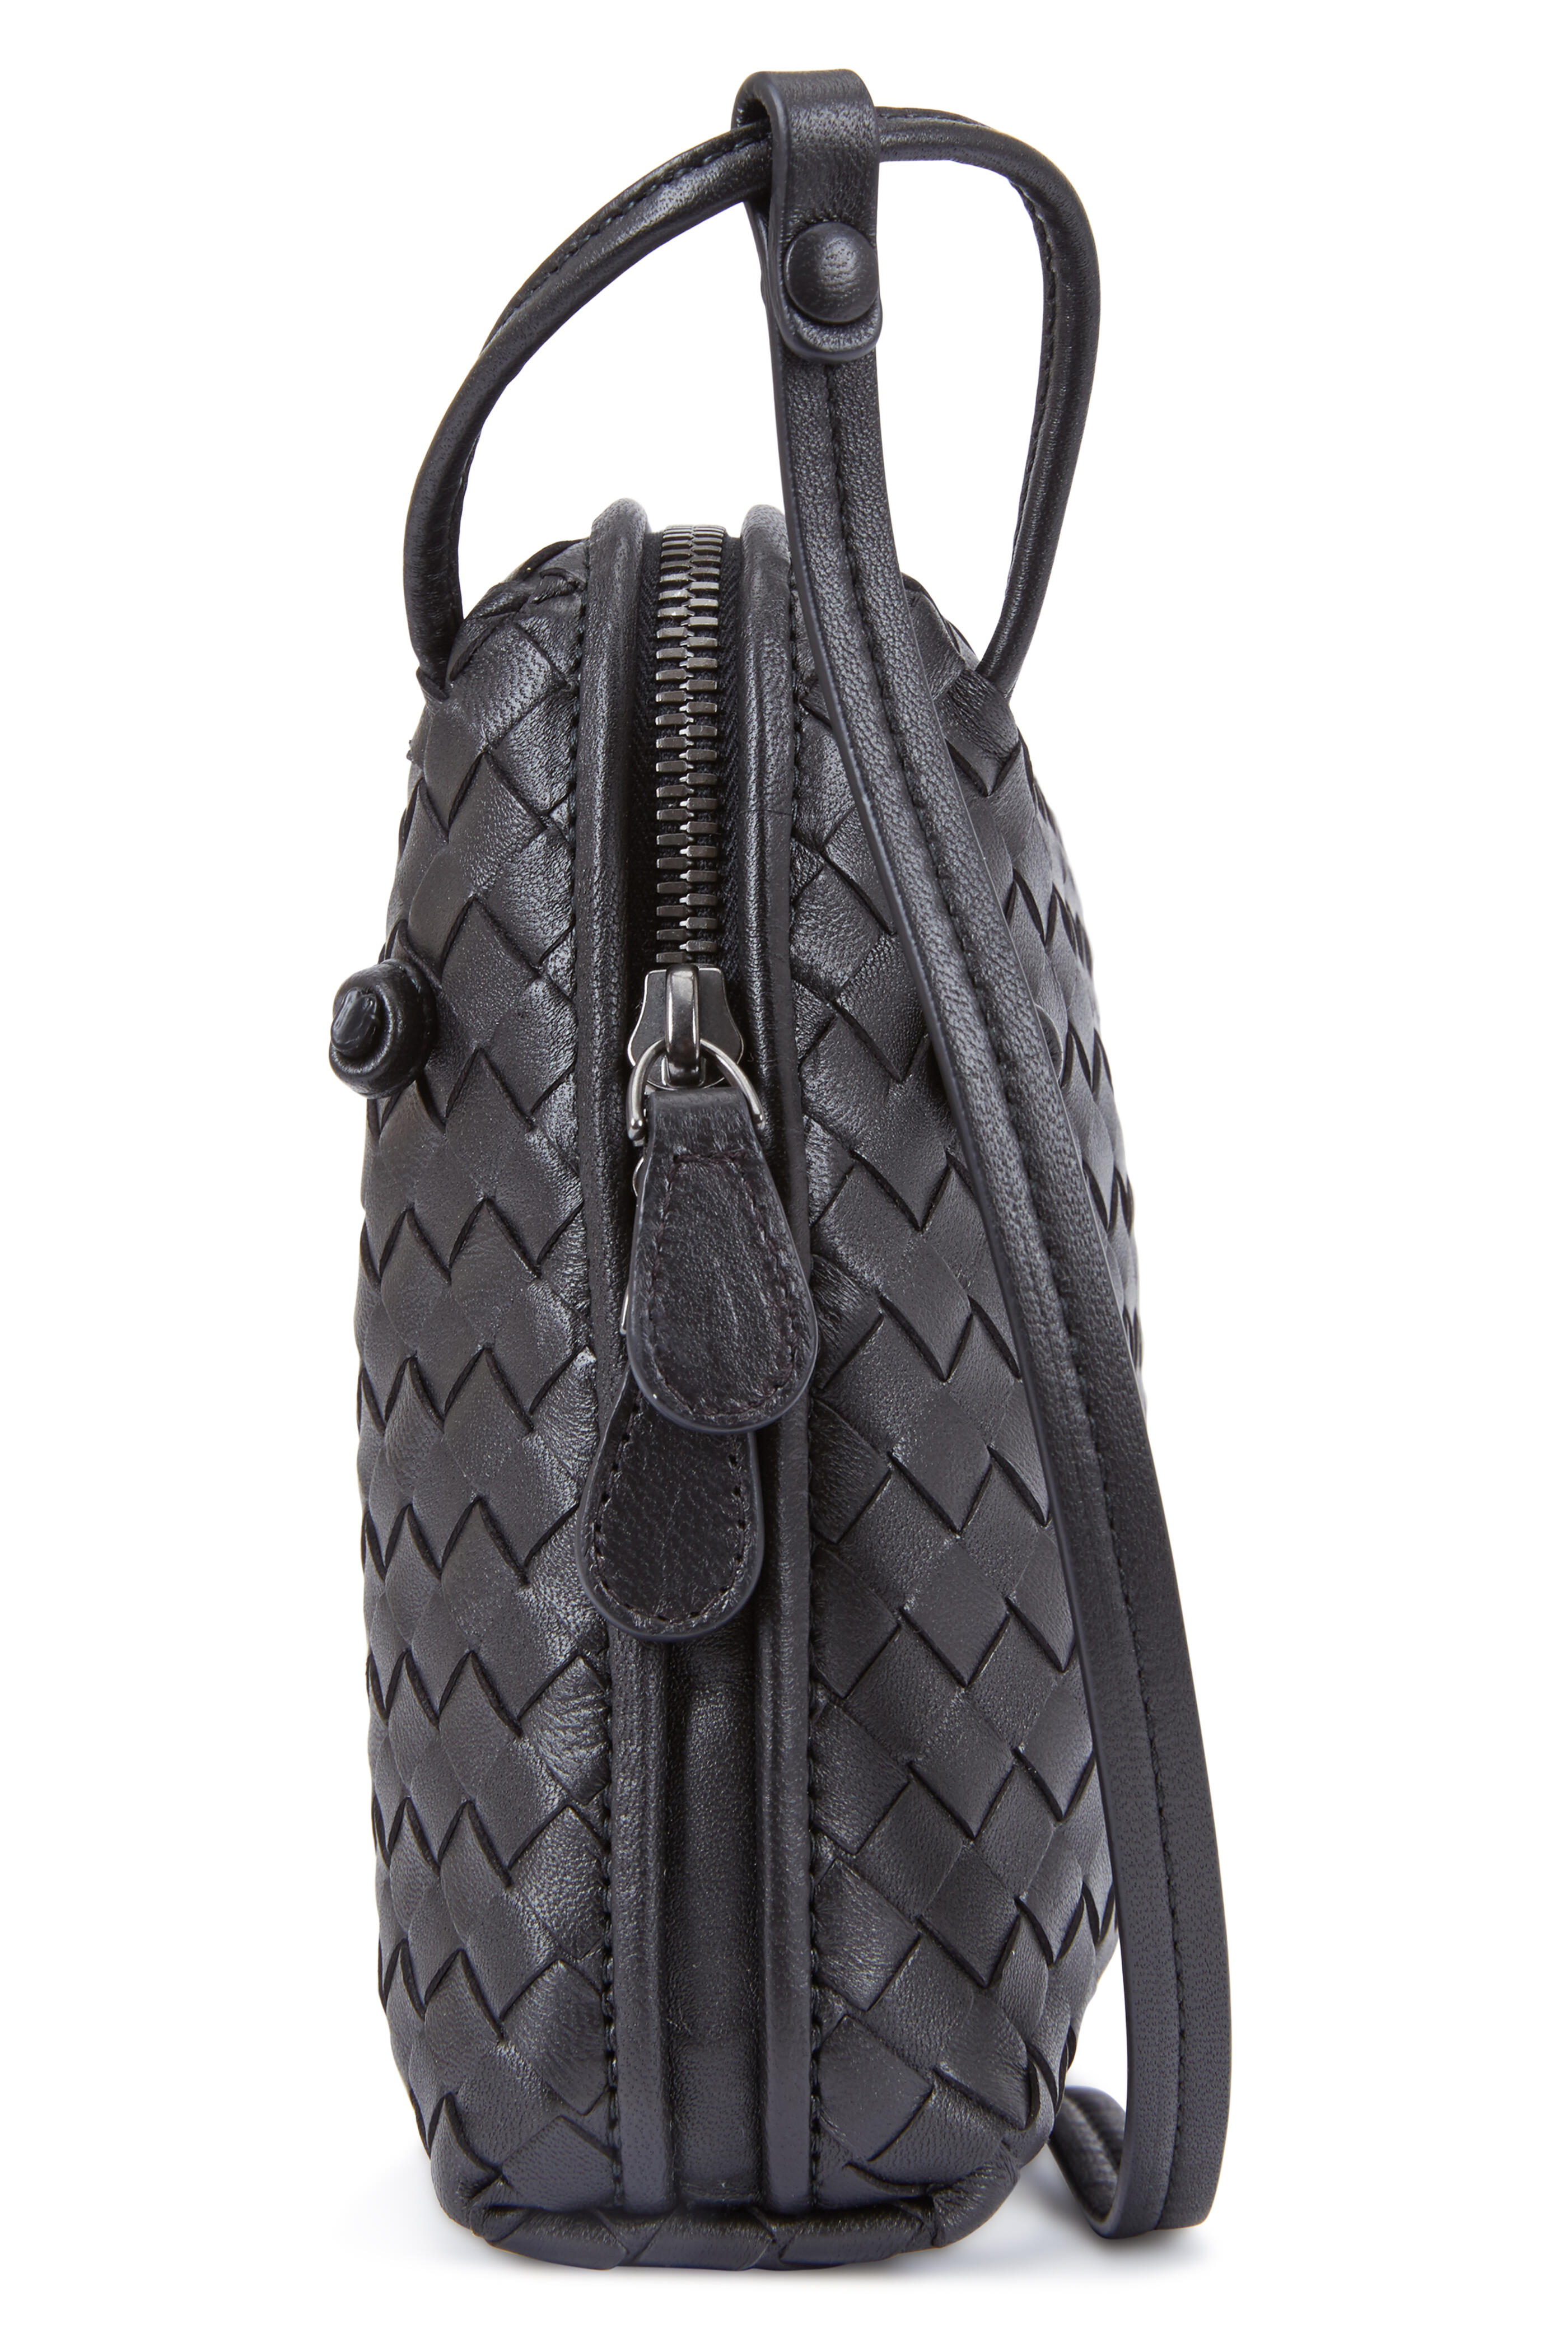 Bottega Veneta Women's Mini Black Woven Leather Crossbody Bag | by Mitchell Stores